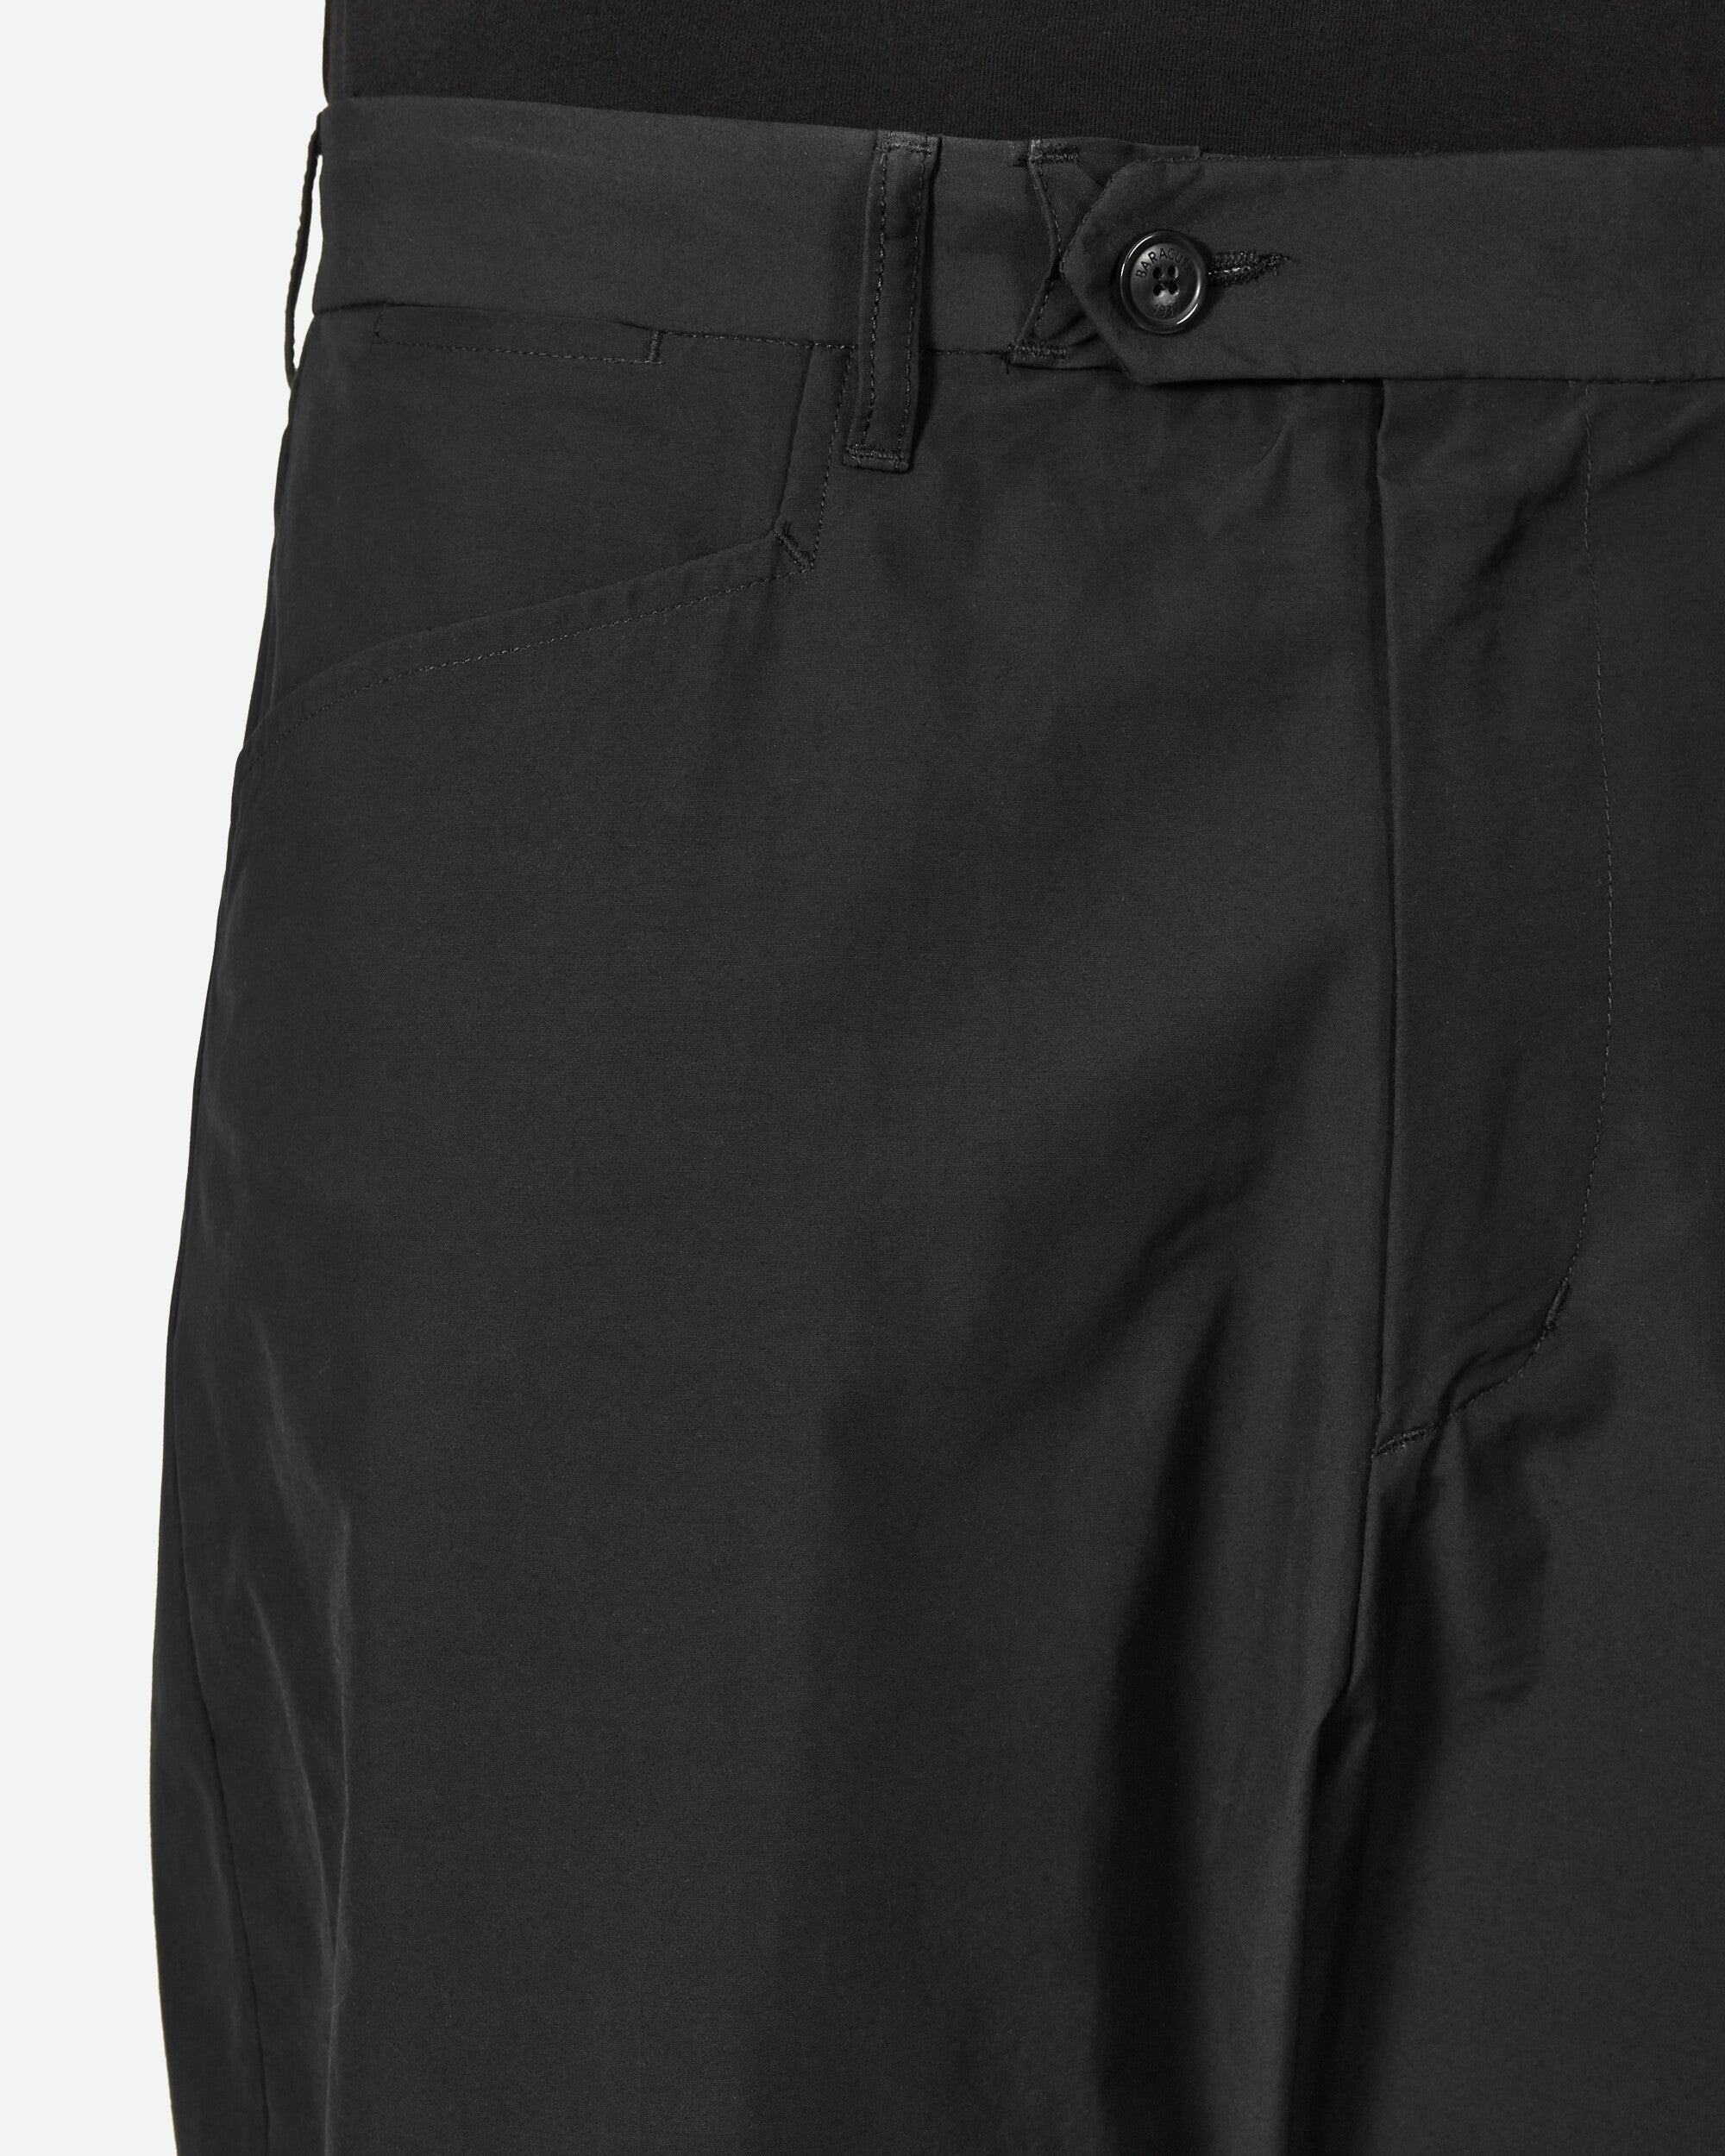 Baracuta Brighton Pant Dark Navy Pants Trousers BRPAN0022 BCNY1